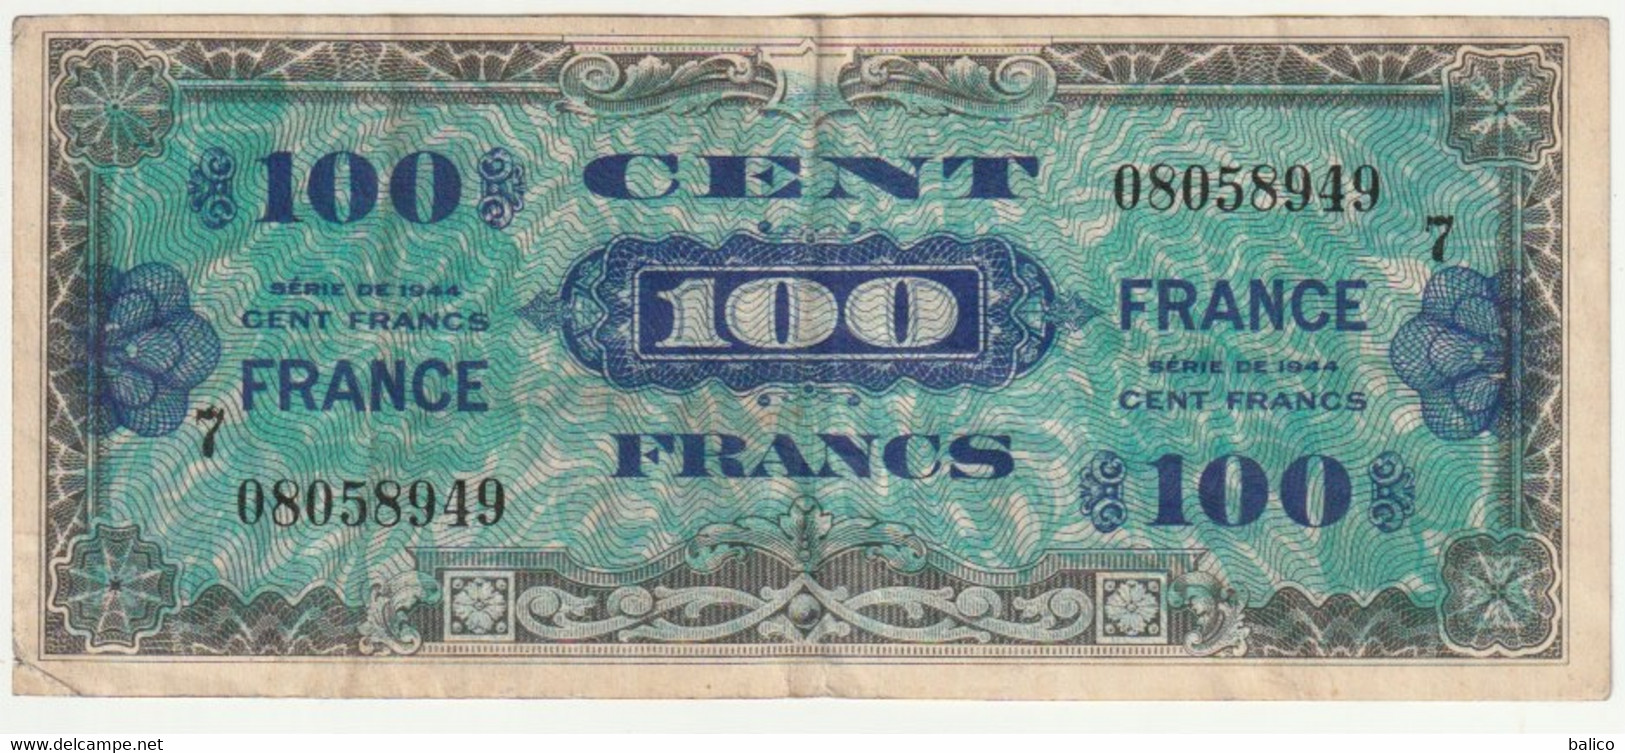 France, 100 Francs   1944   N° 08058949 - 1944 Drapeau/Francia